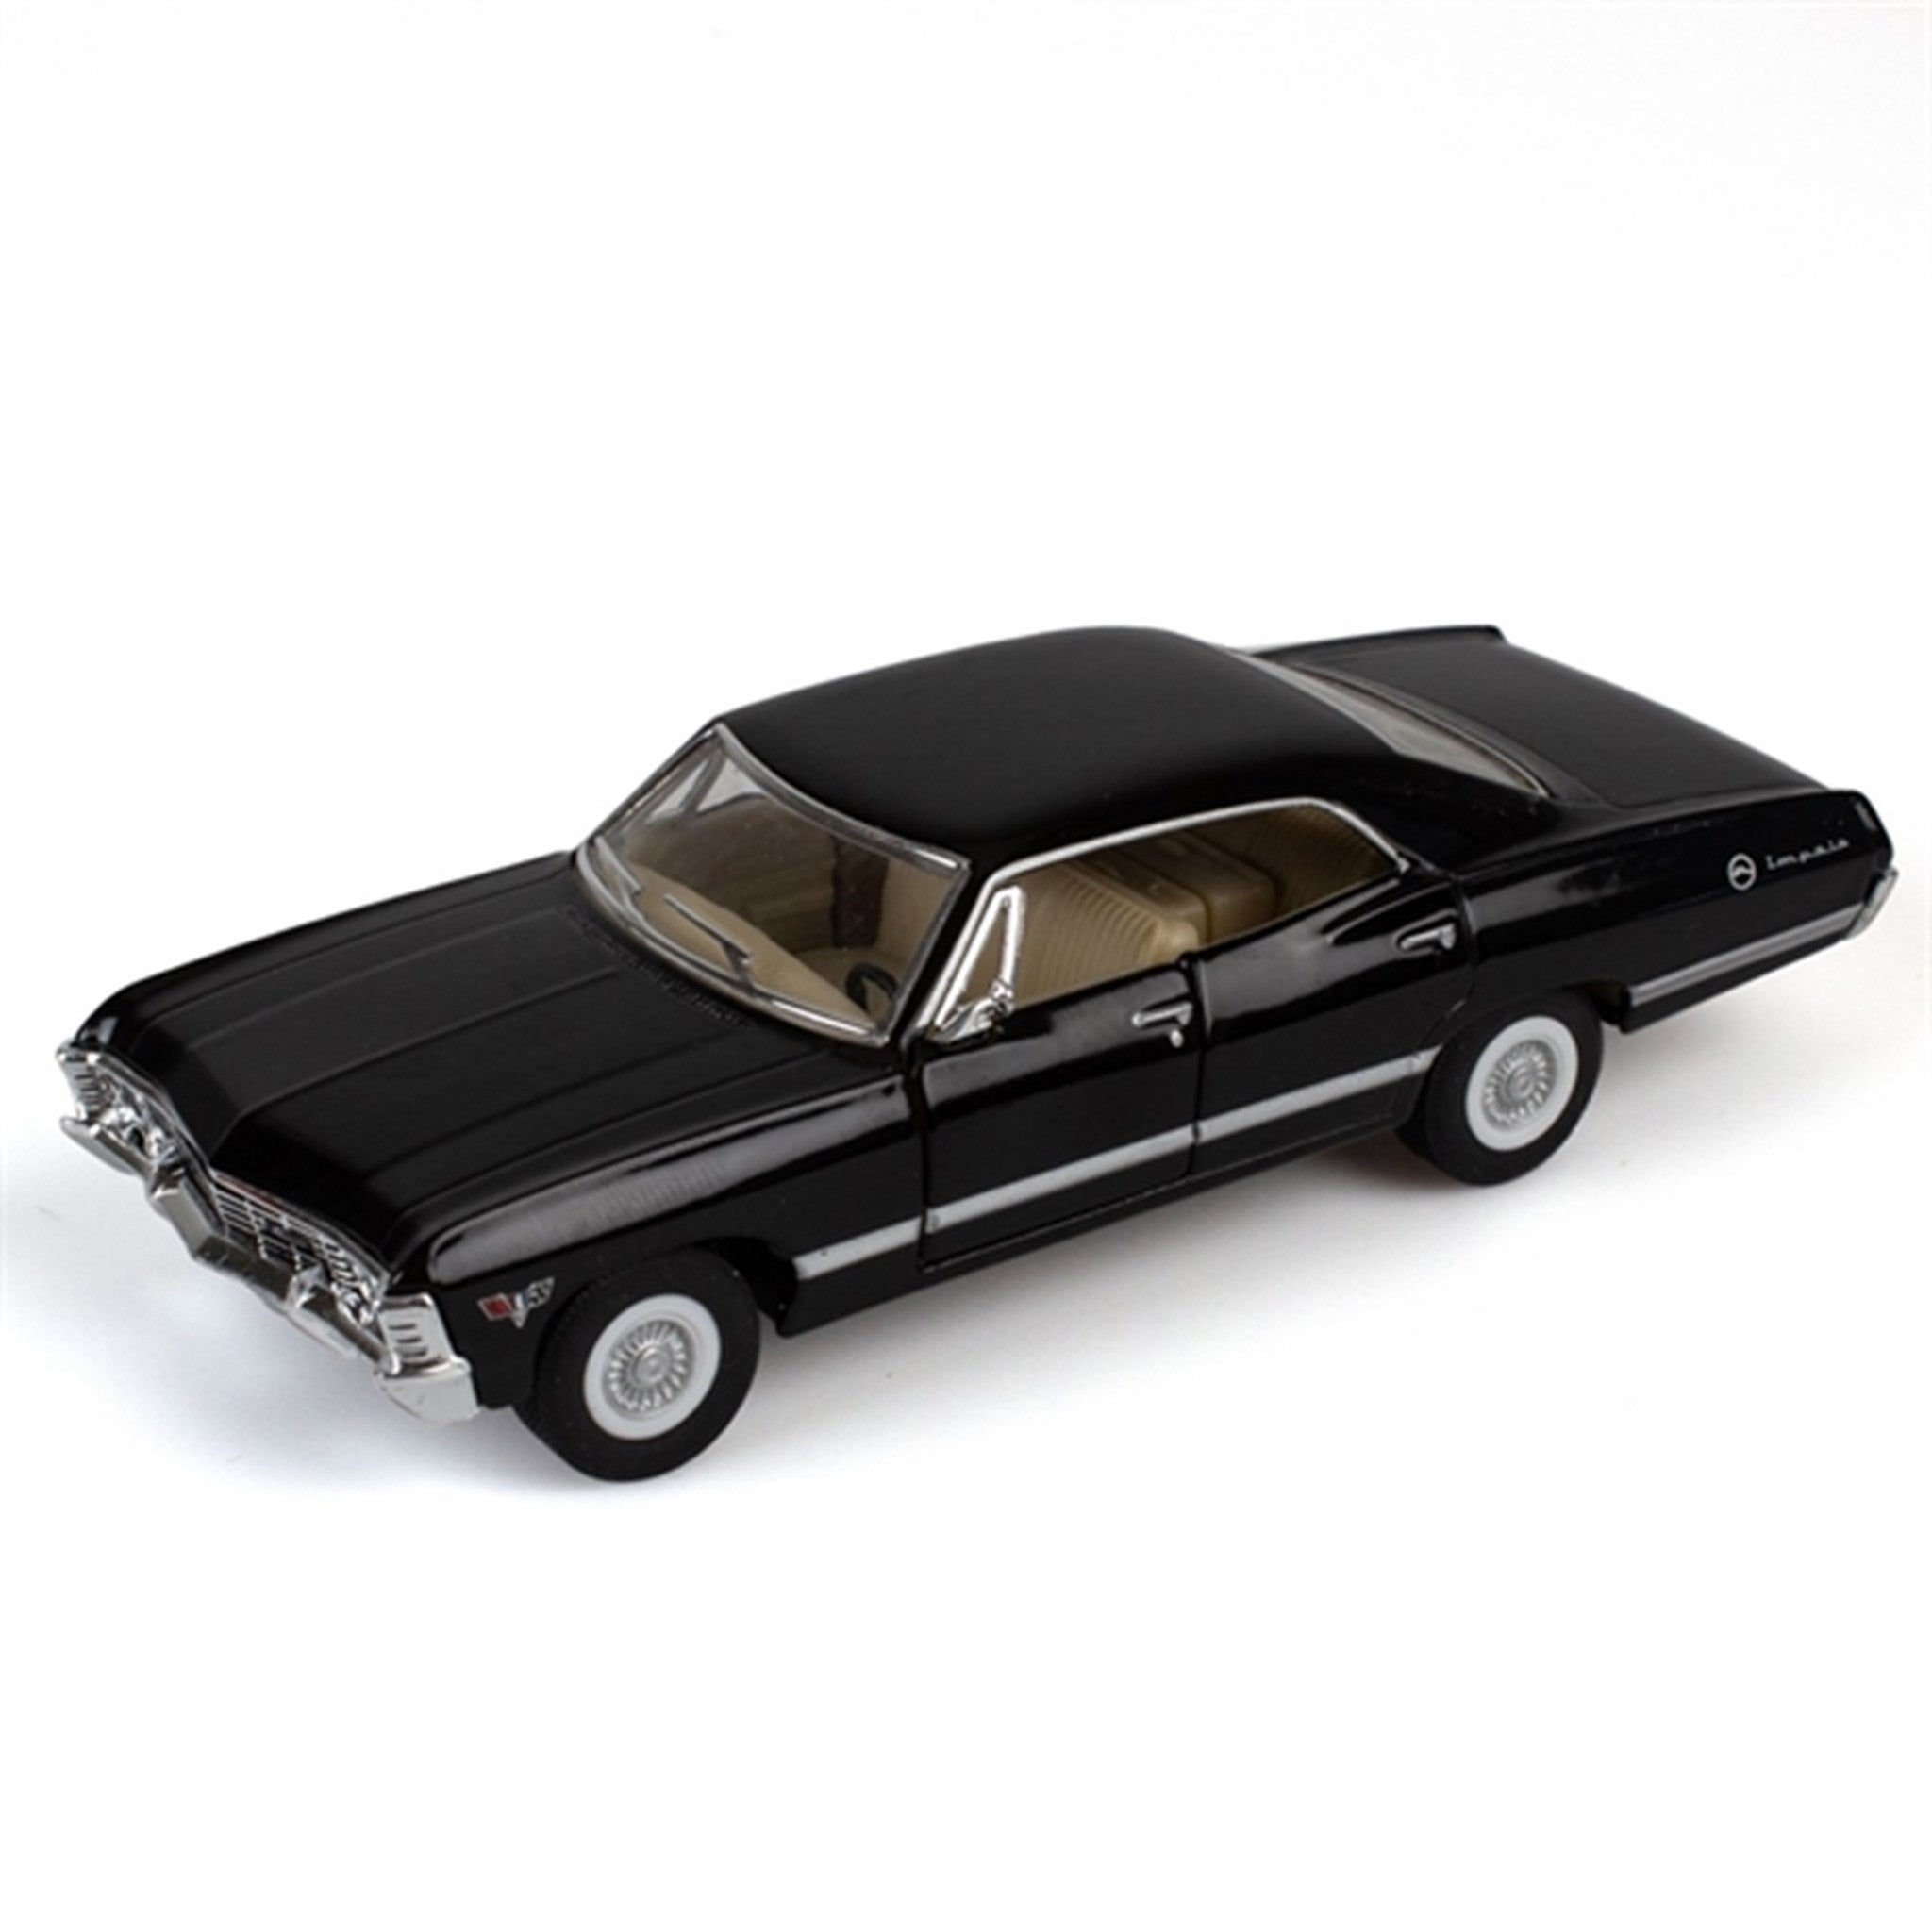 Magni Chevrolet Impala (1967) - Black